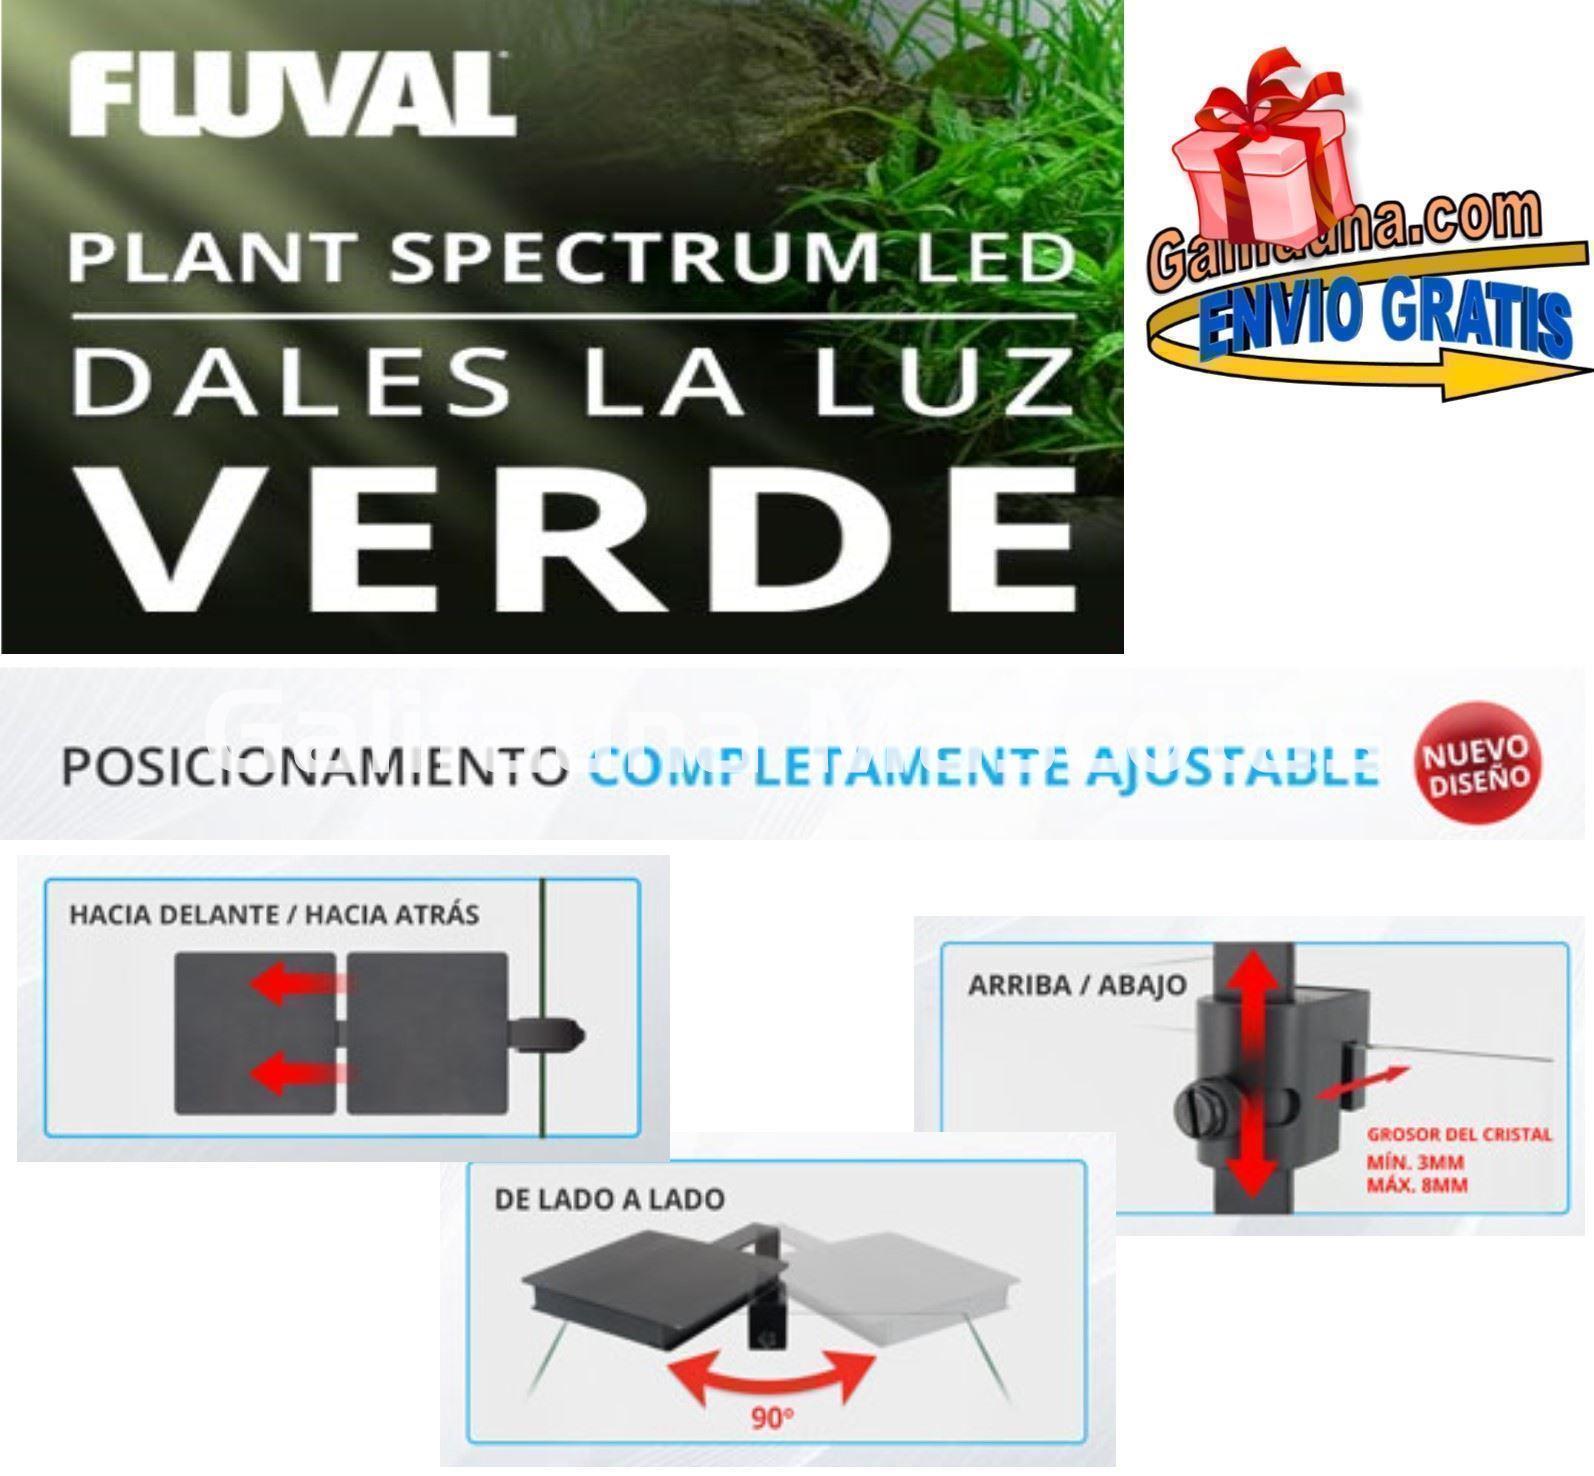 PANTALLA LED BLUETOOTH FLUVAL PLANT SPECTRUM 3. Especial plantación. APP Fluval. Brazos extensibles. - Imagen 11